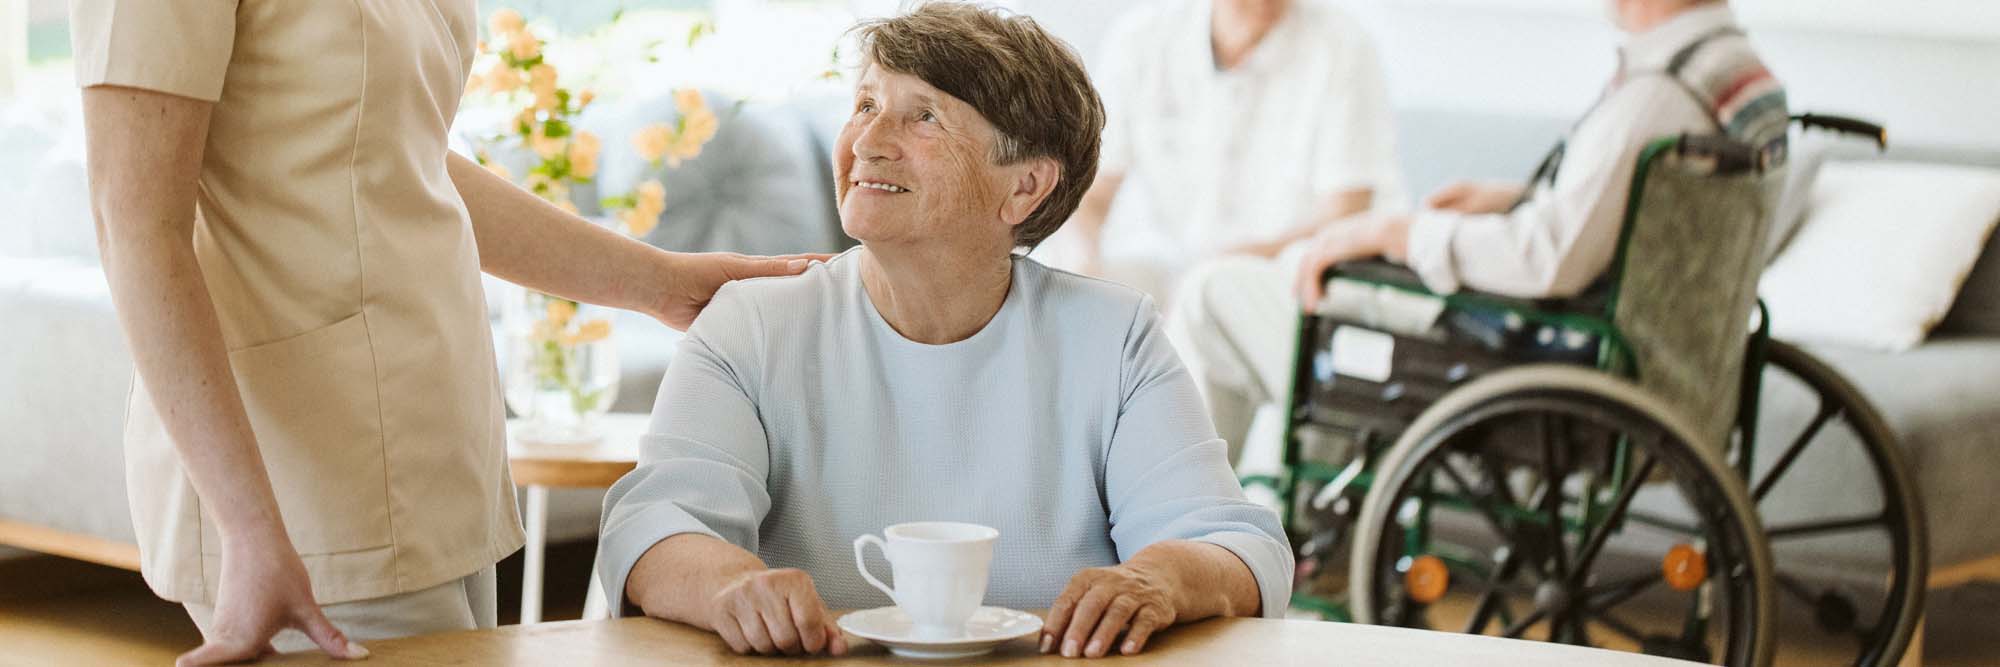 Happy senior woman and helpful caregiver, nursing home concept p